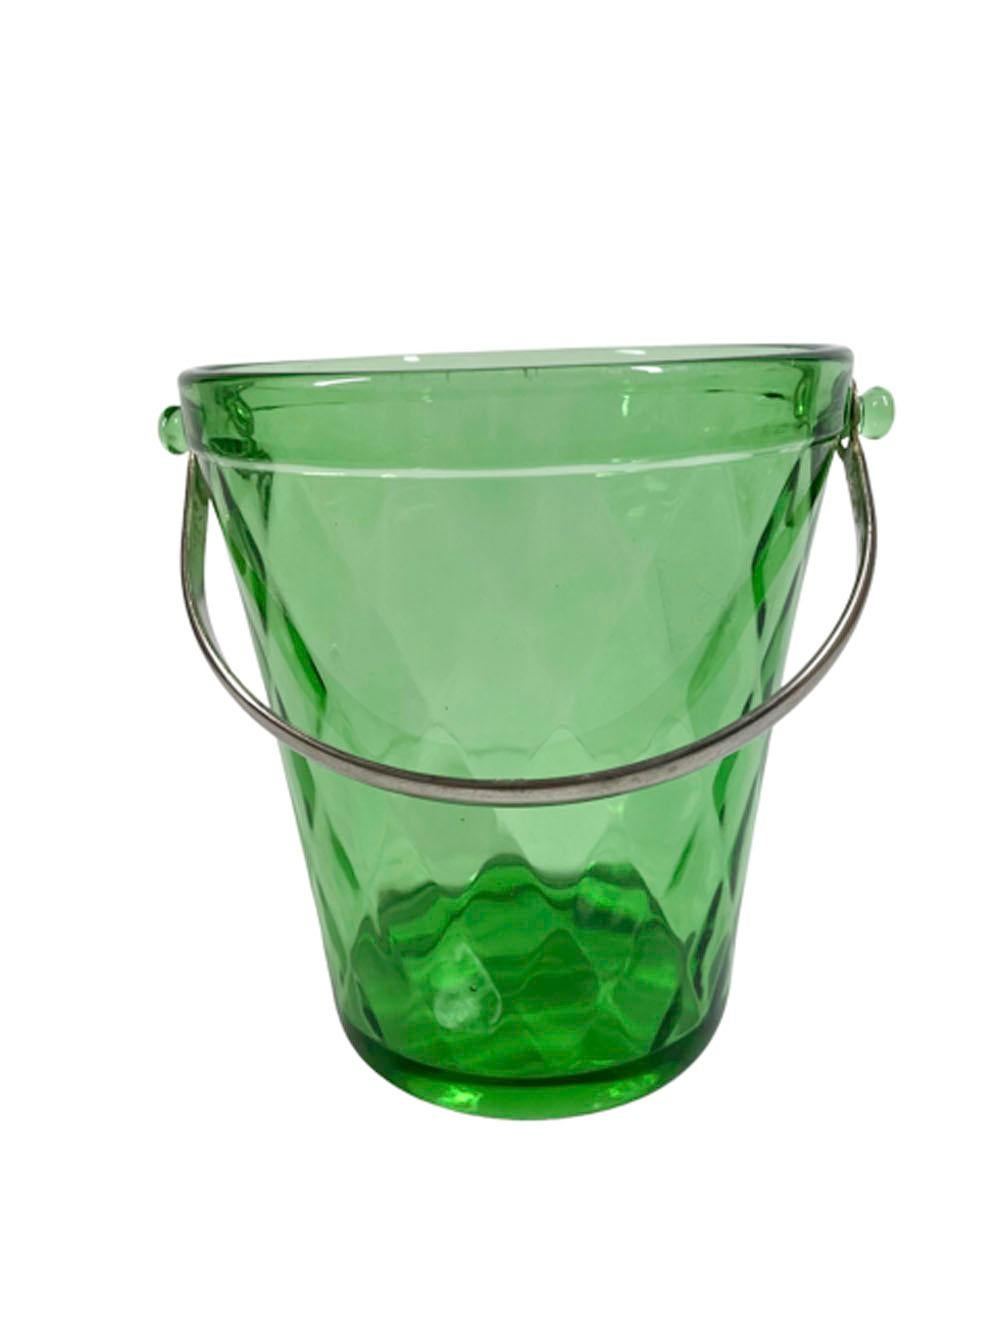 green depression glass ice bucket